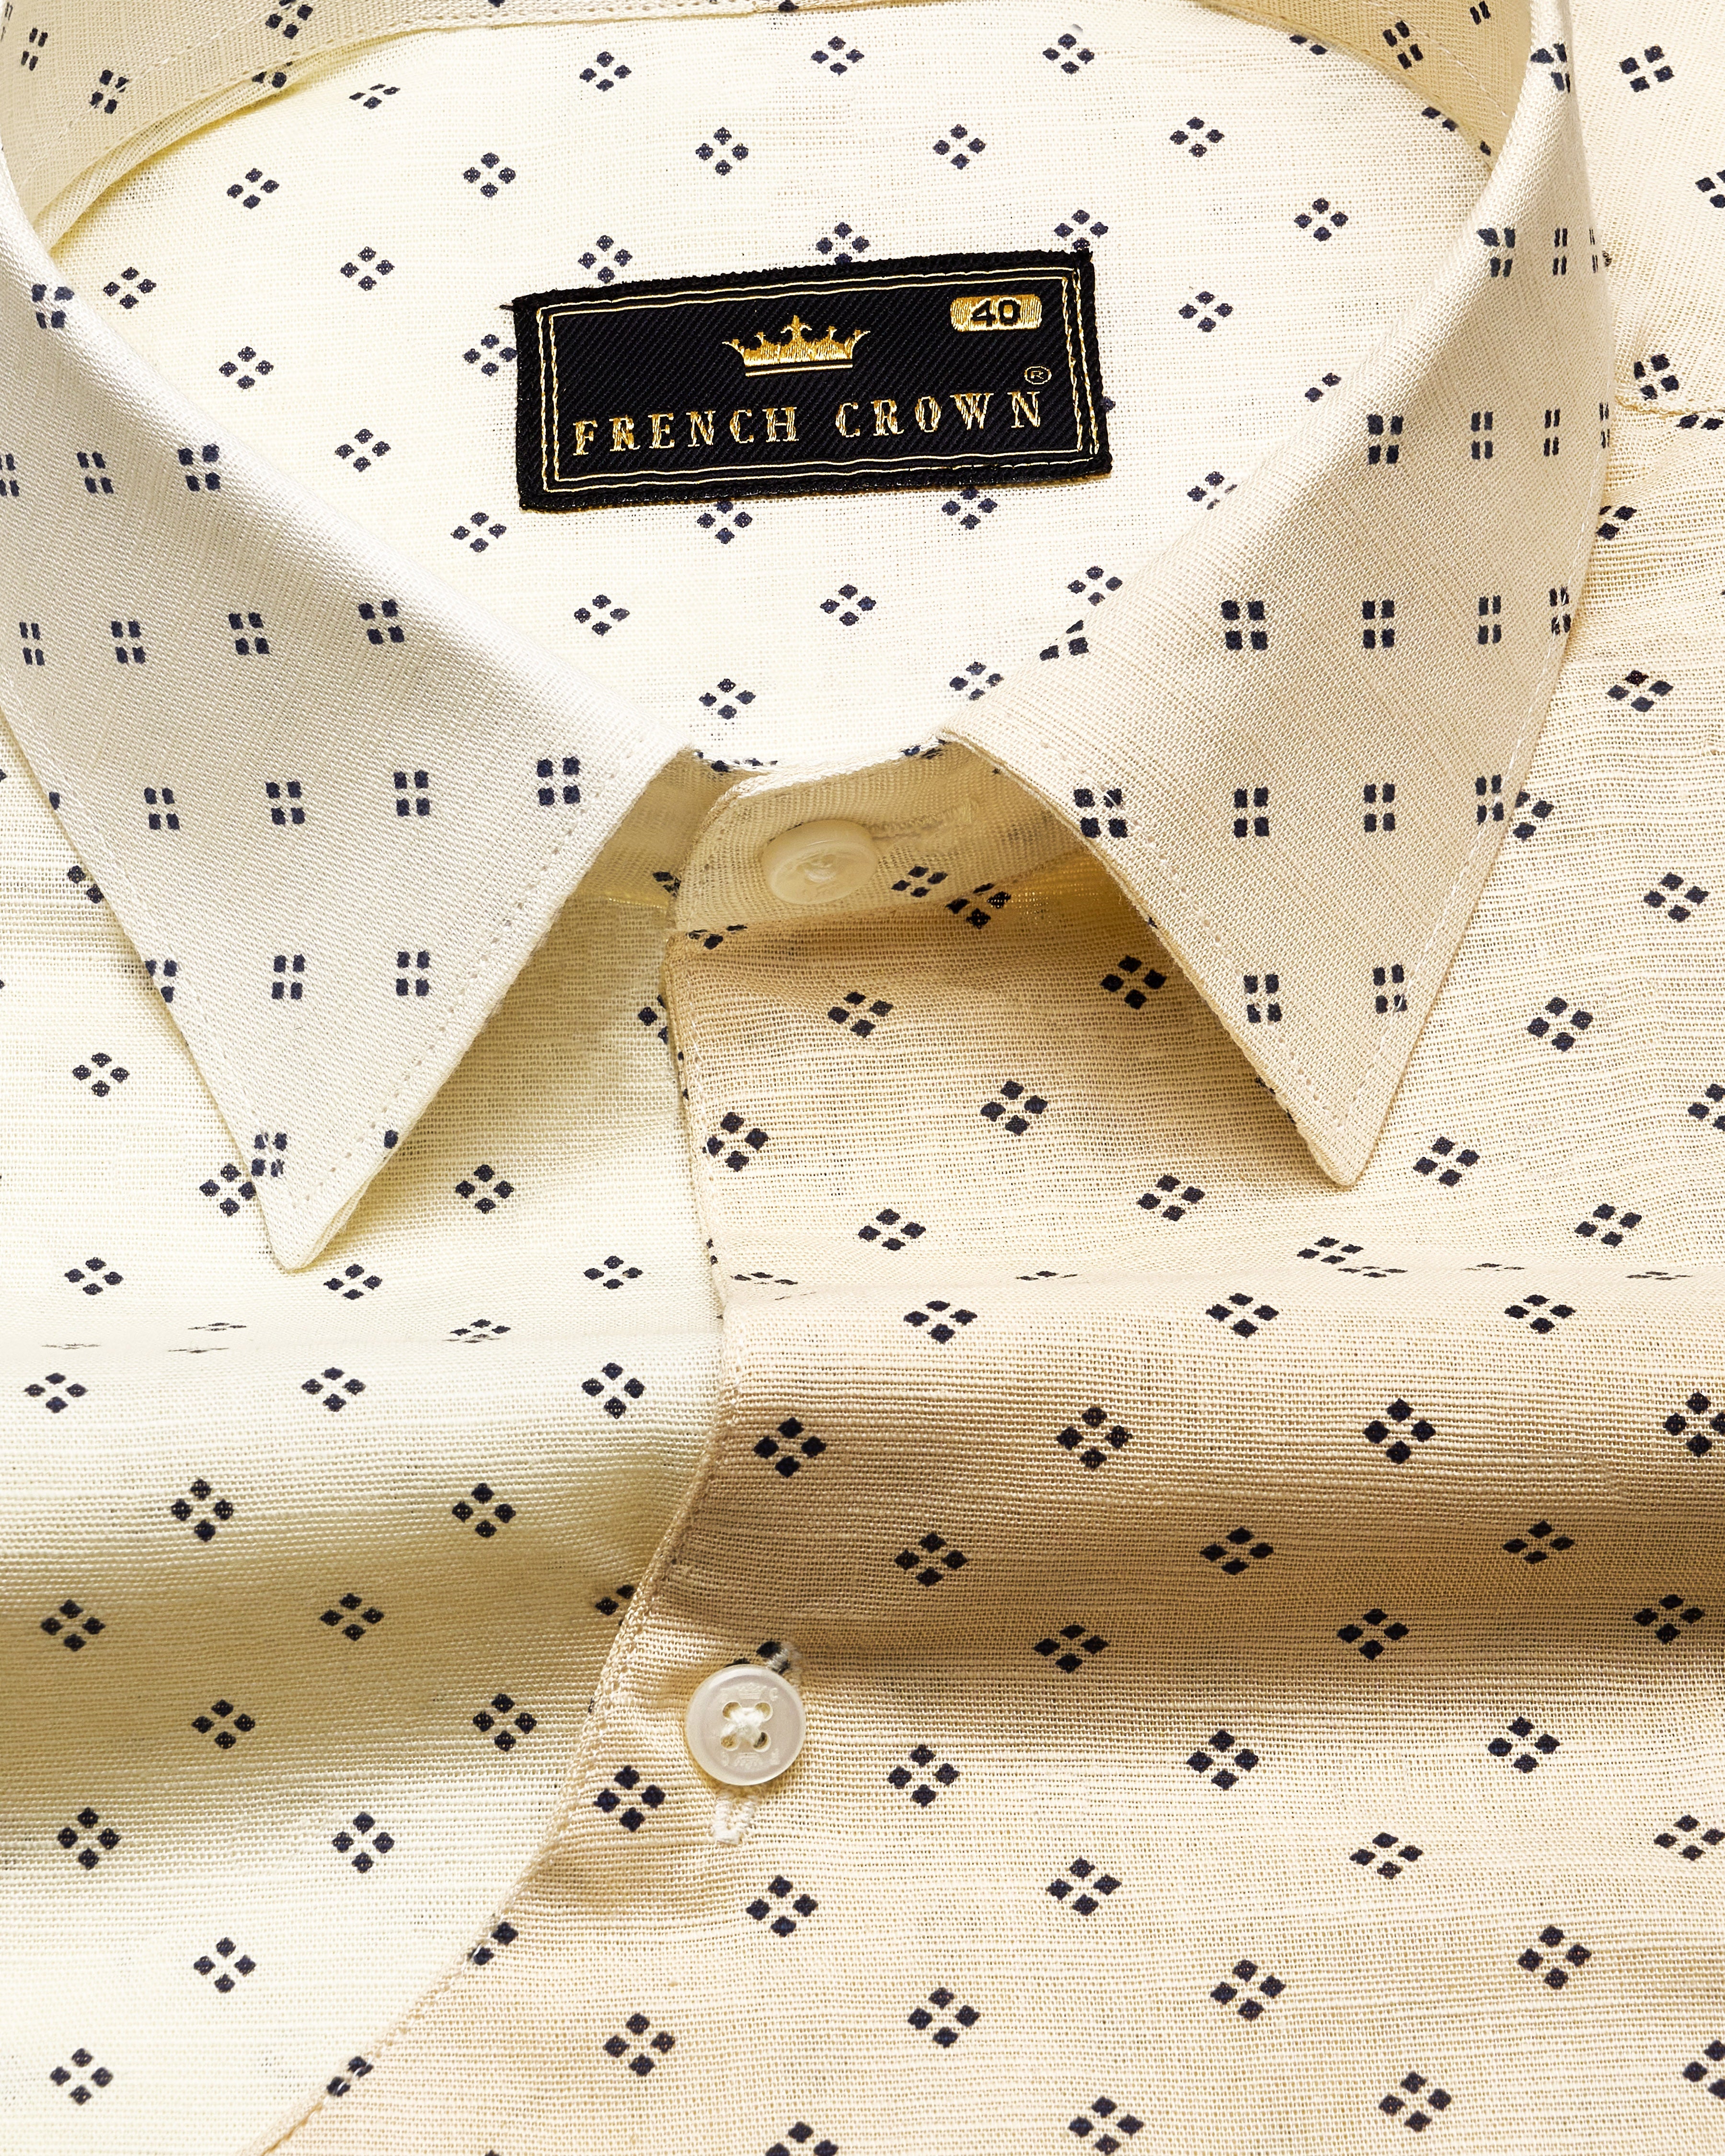 Hampton Beige with Mercury Cream Luxurious Linen Designer Shirt